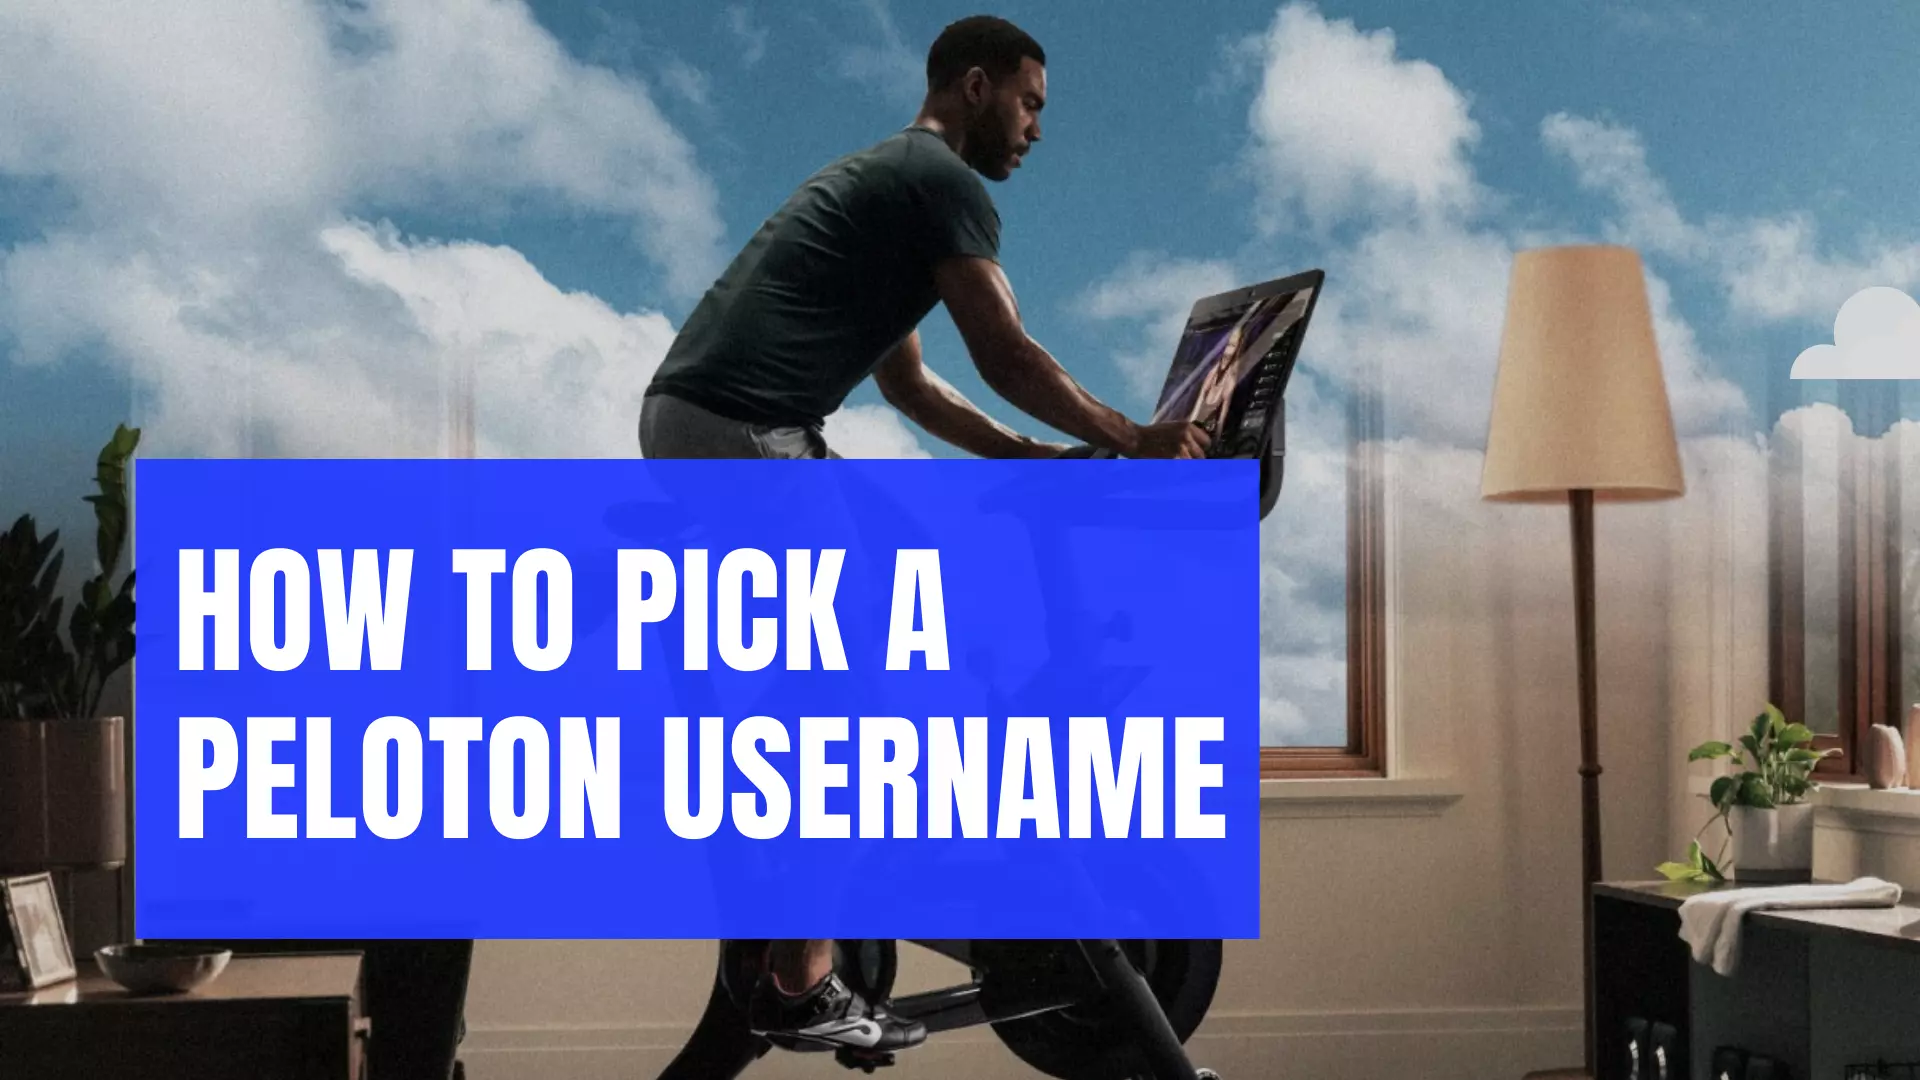 How To Pick a Peloton Username